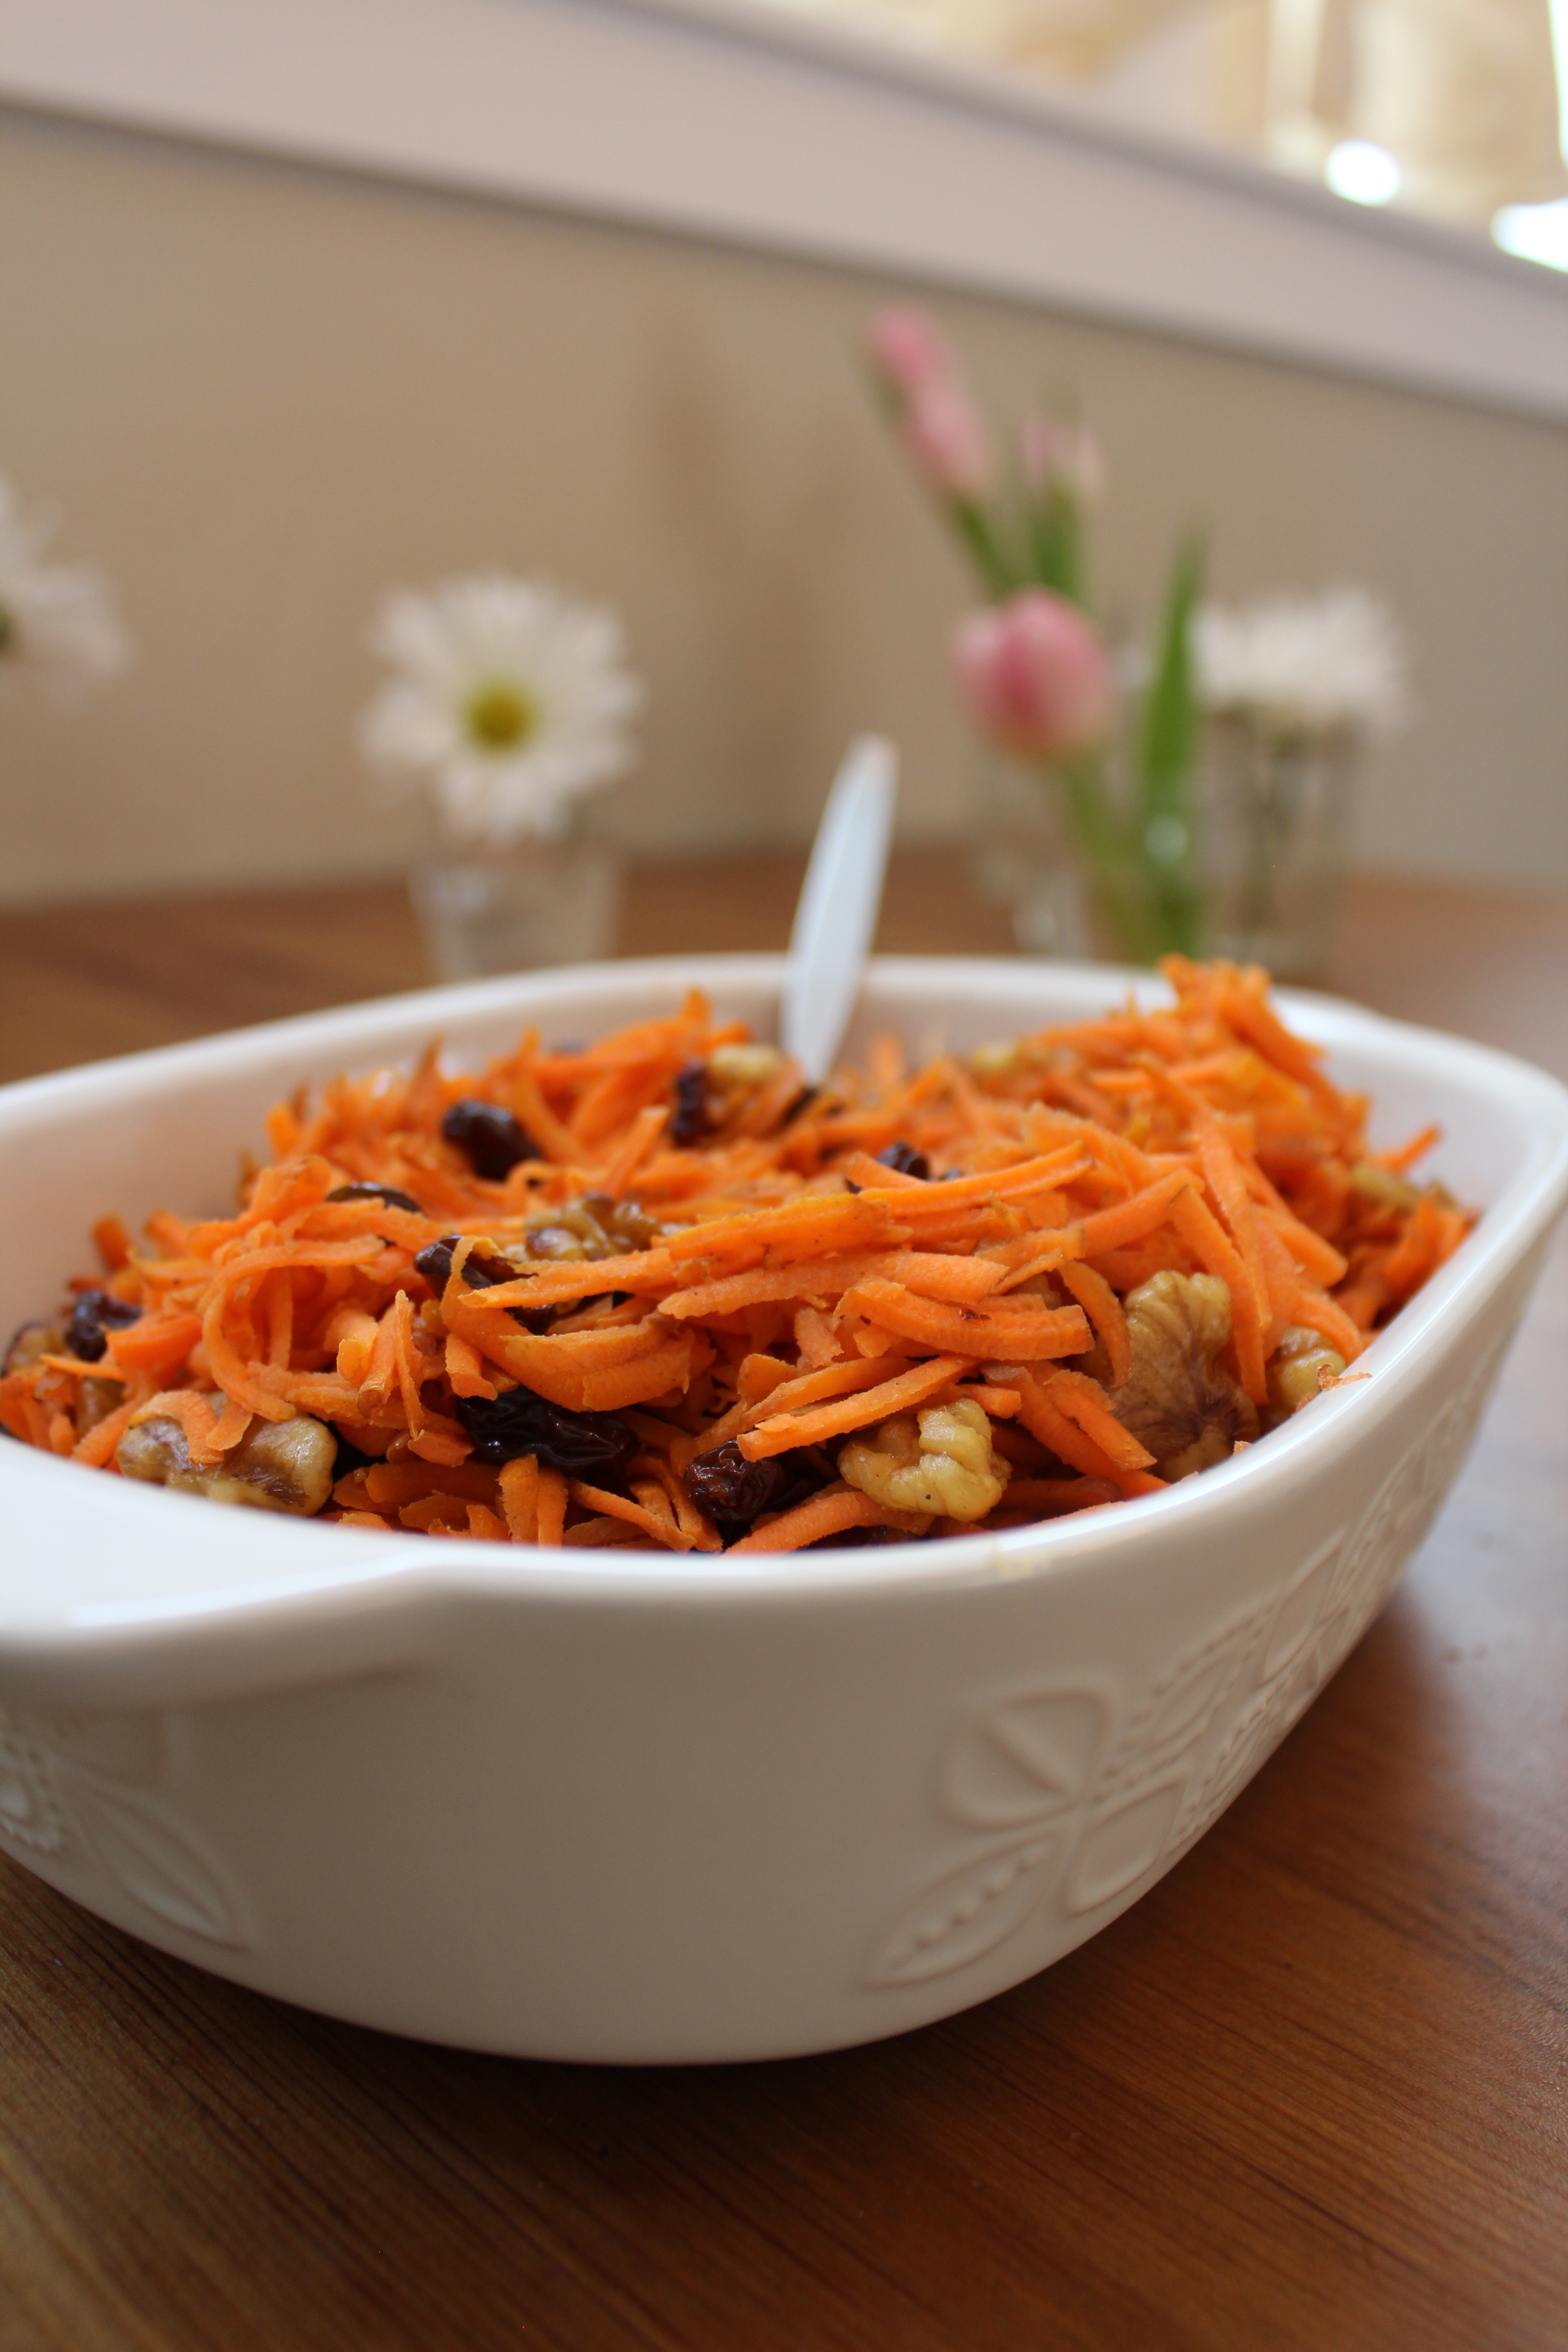 Warm Carrot Salad with Walnuts and Raisins